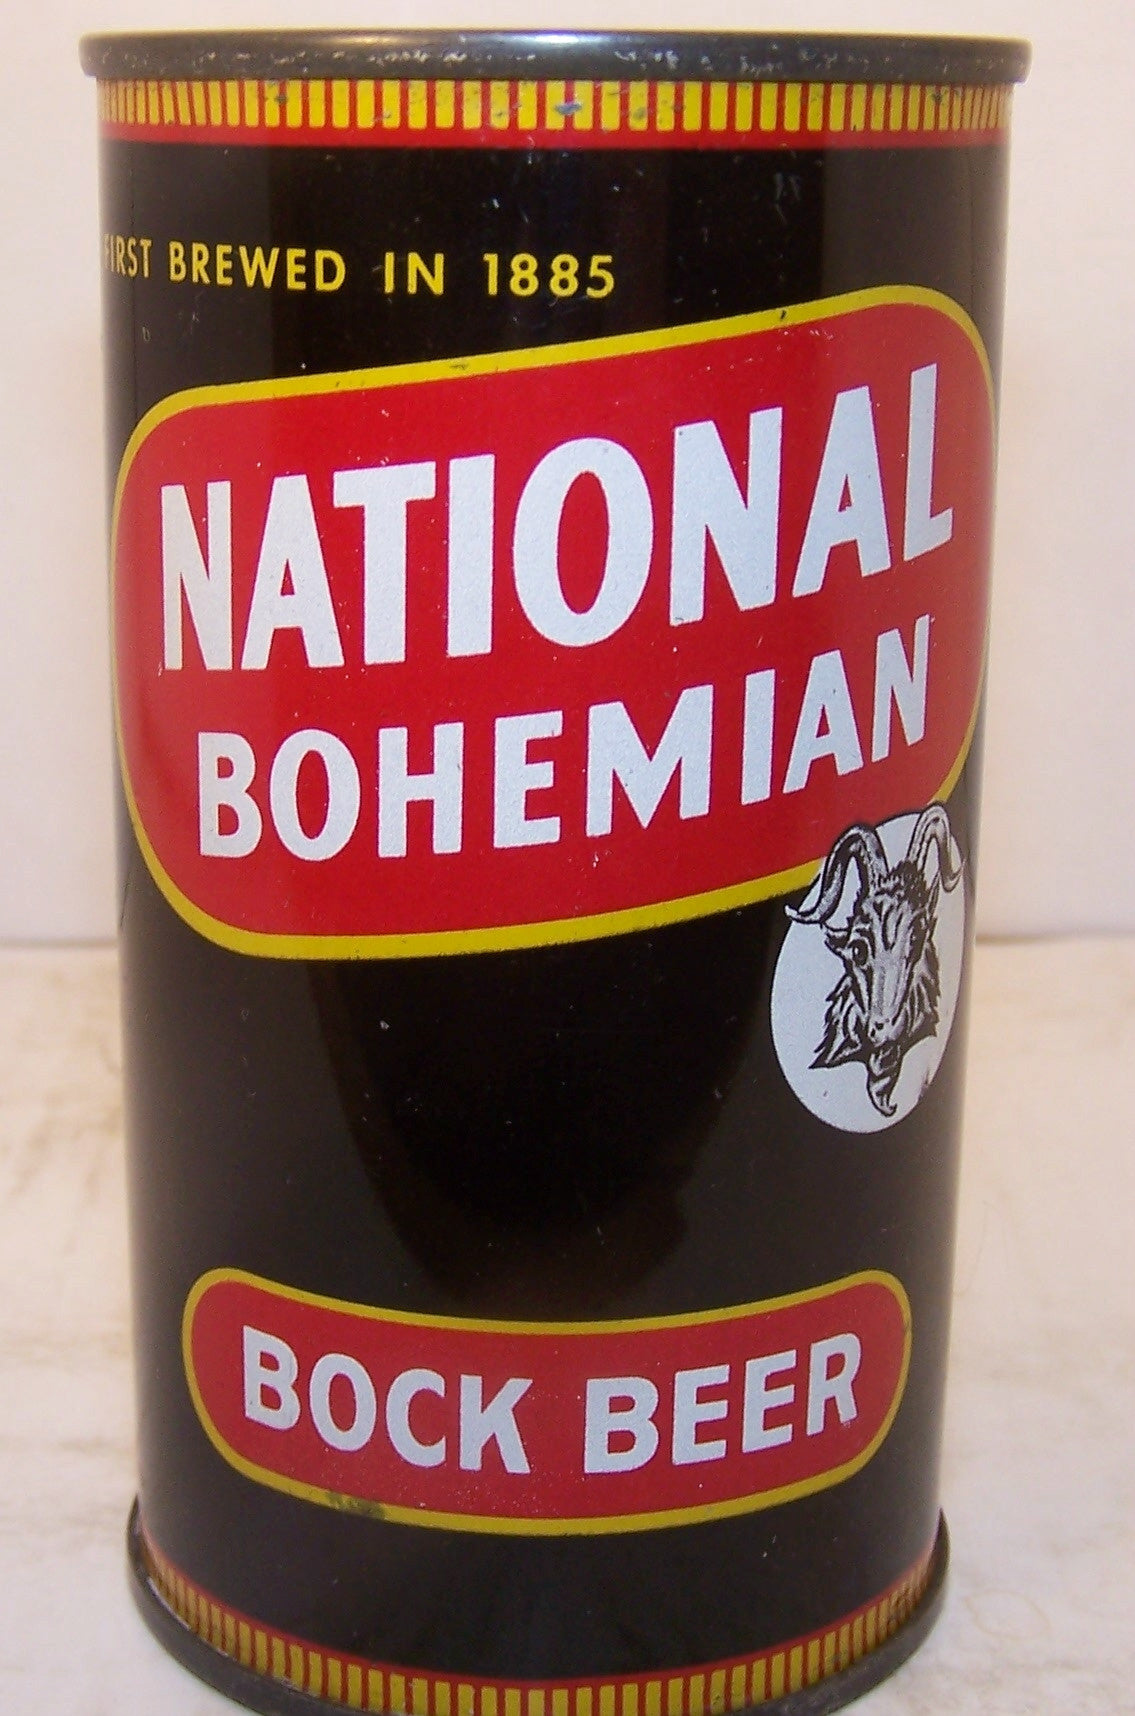 National Bohemian Bock Beer, USBC 102-16 Grade 1/1+ Sold on 2/22/15